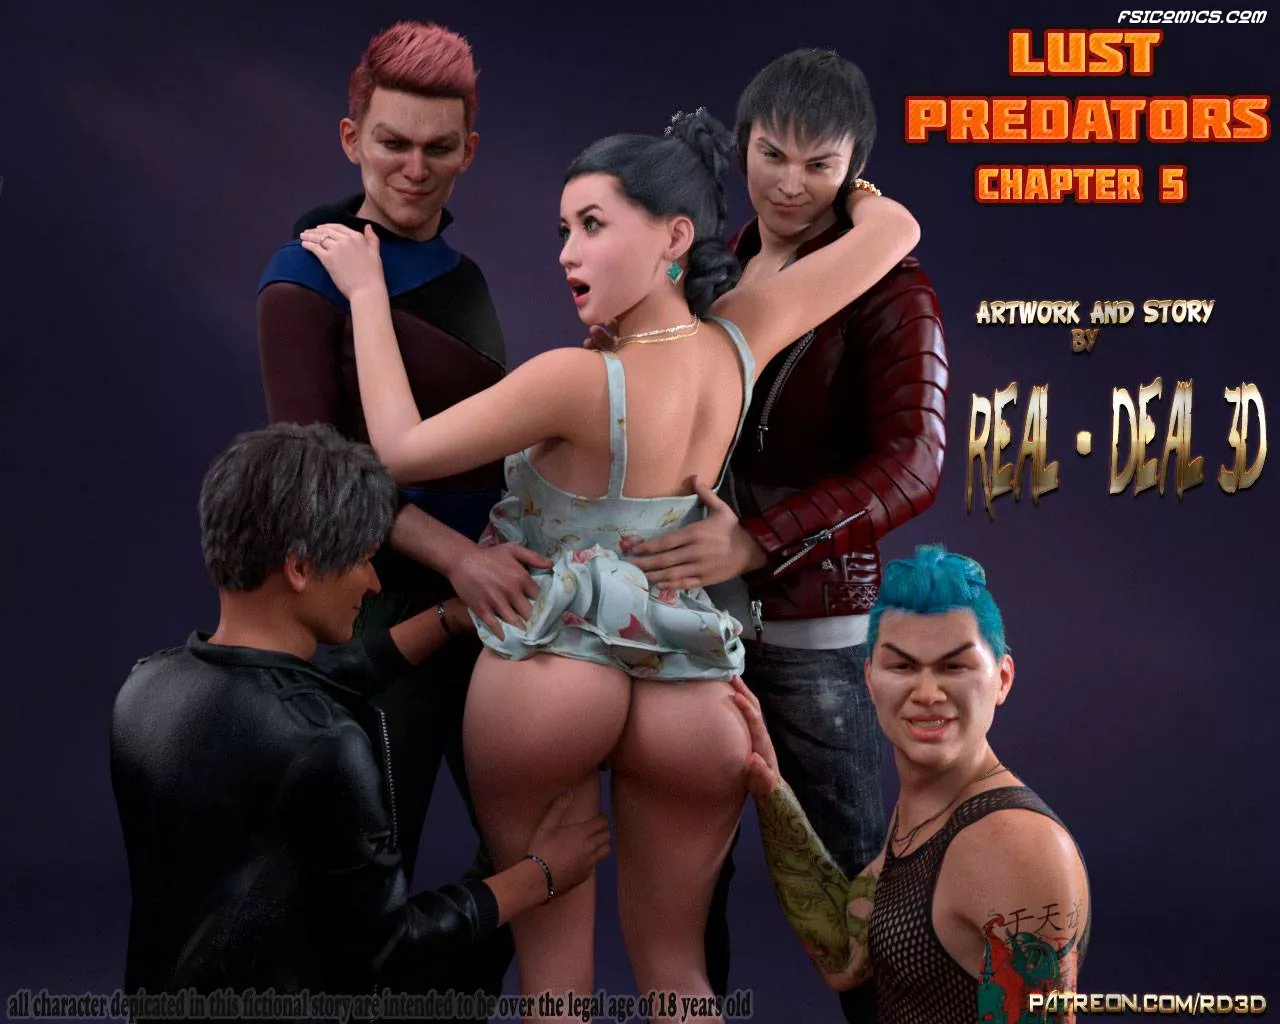 Lust Predators Chapter 5 - Real Deal 3D - 159 - FSIComics